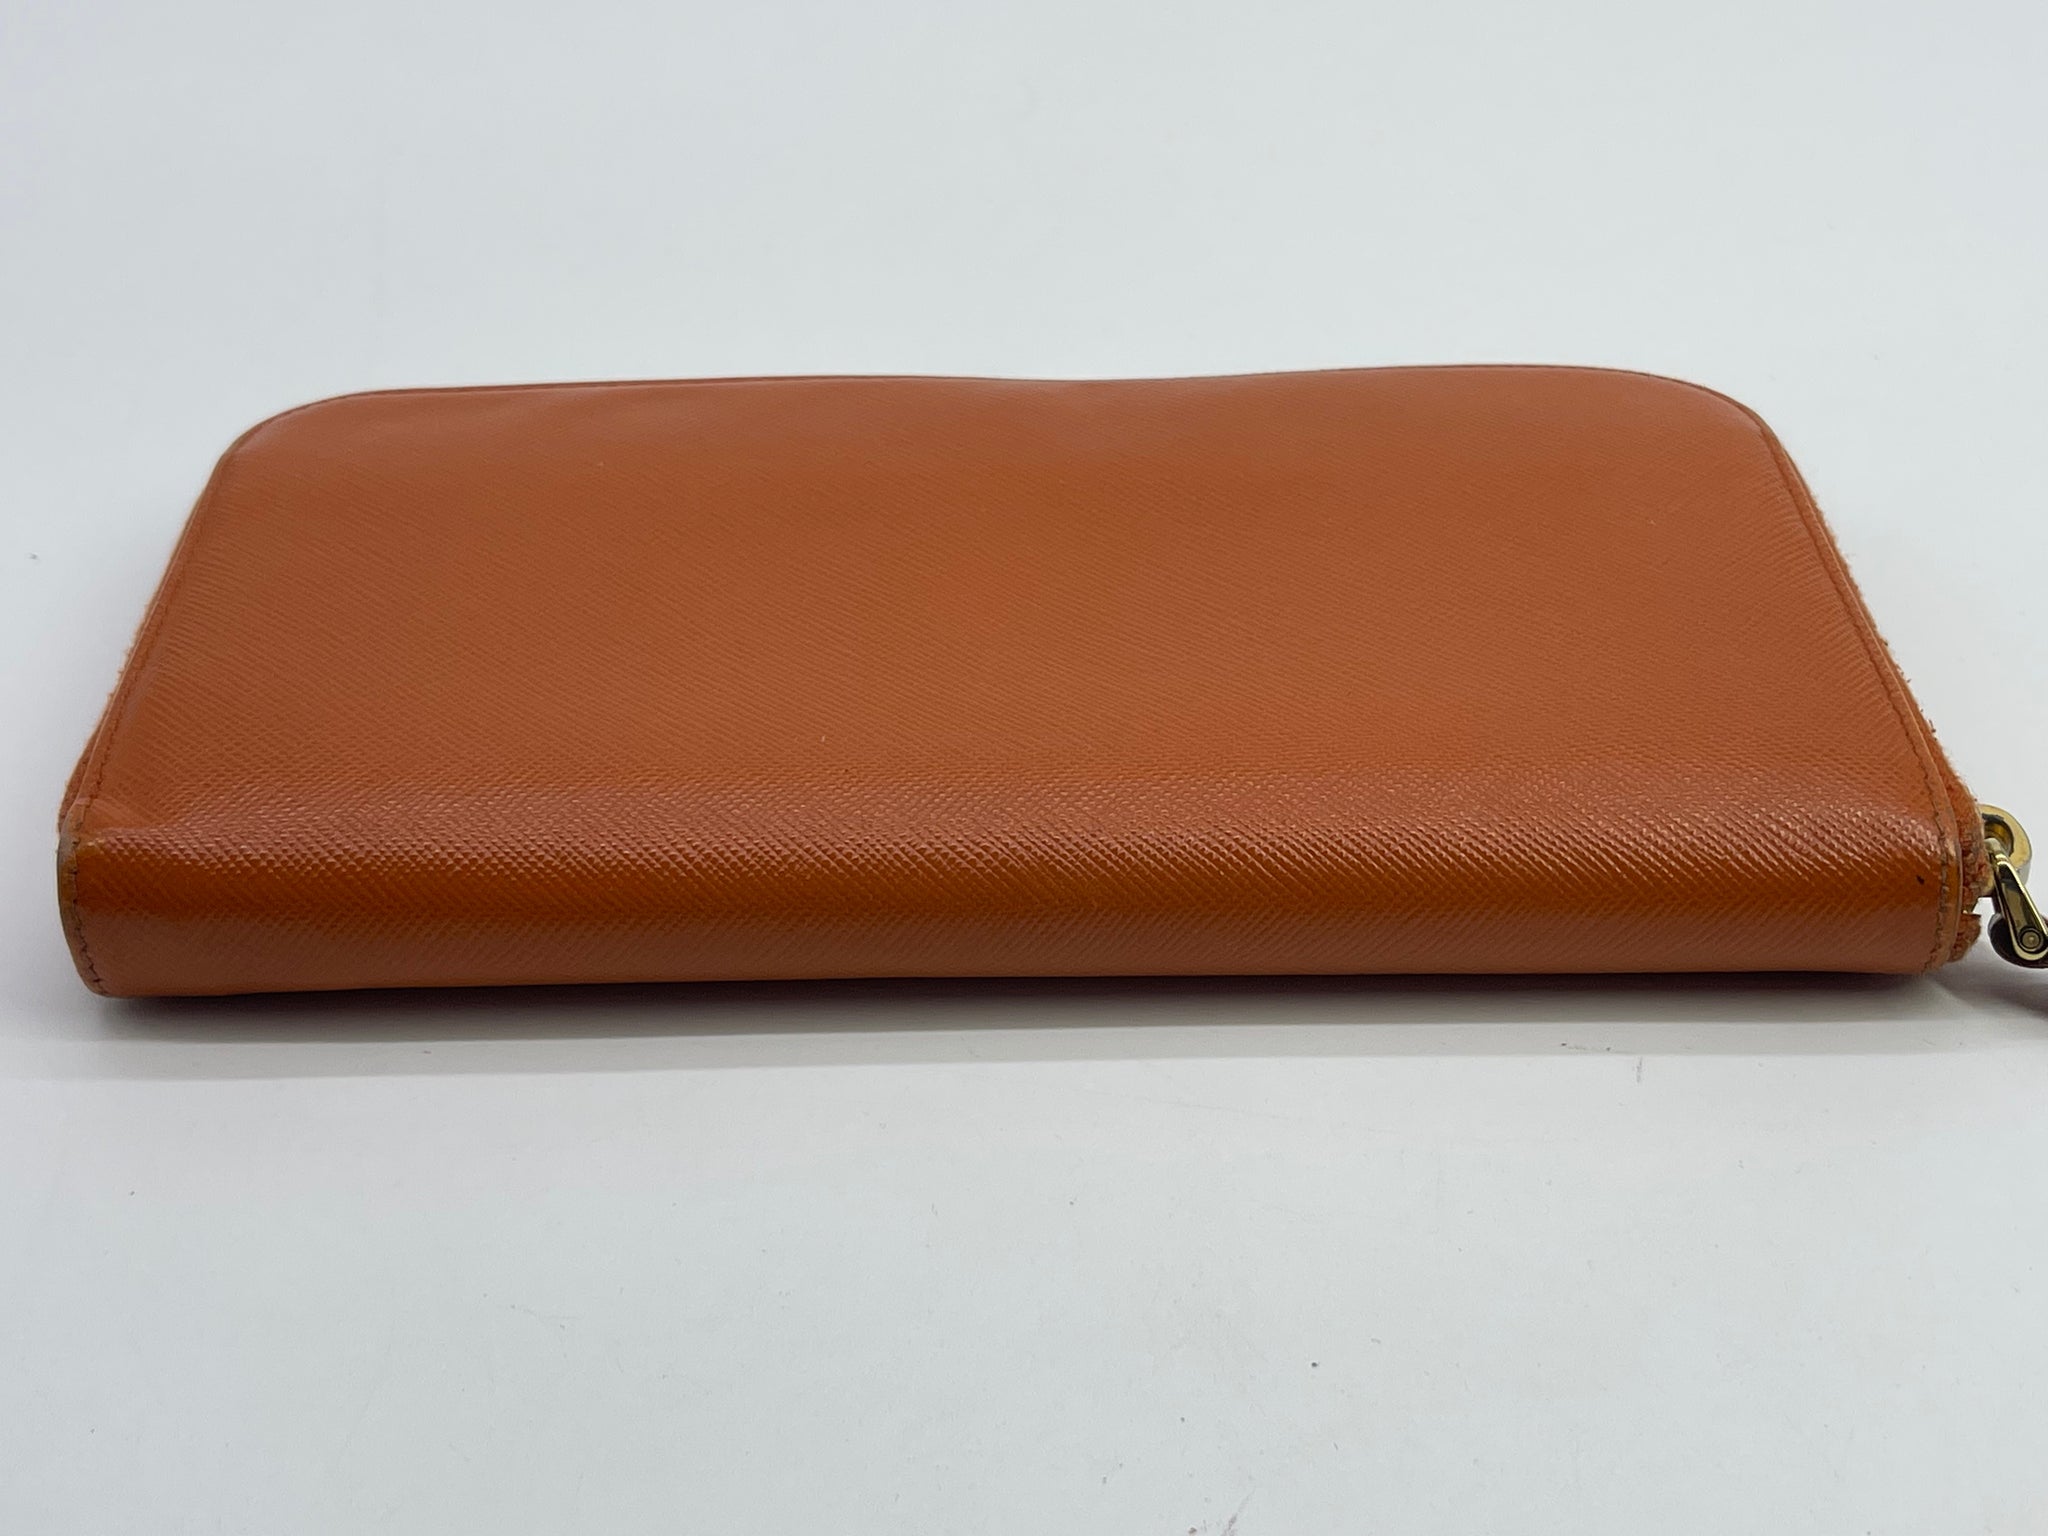 Preloved Prada Saffiano Orange Leather Zipper Wallet 042322 091722